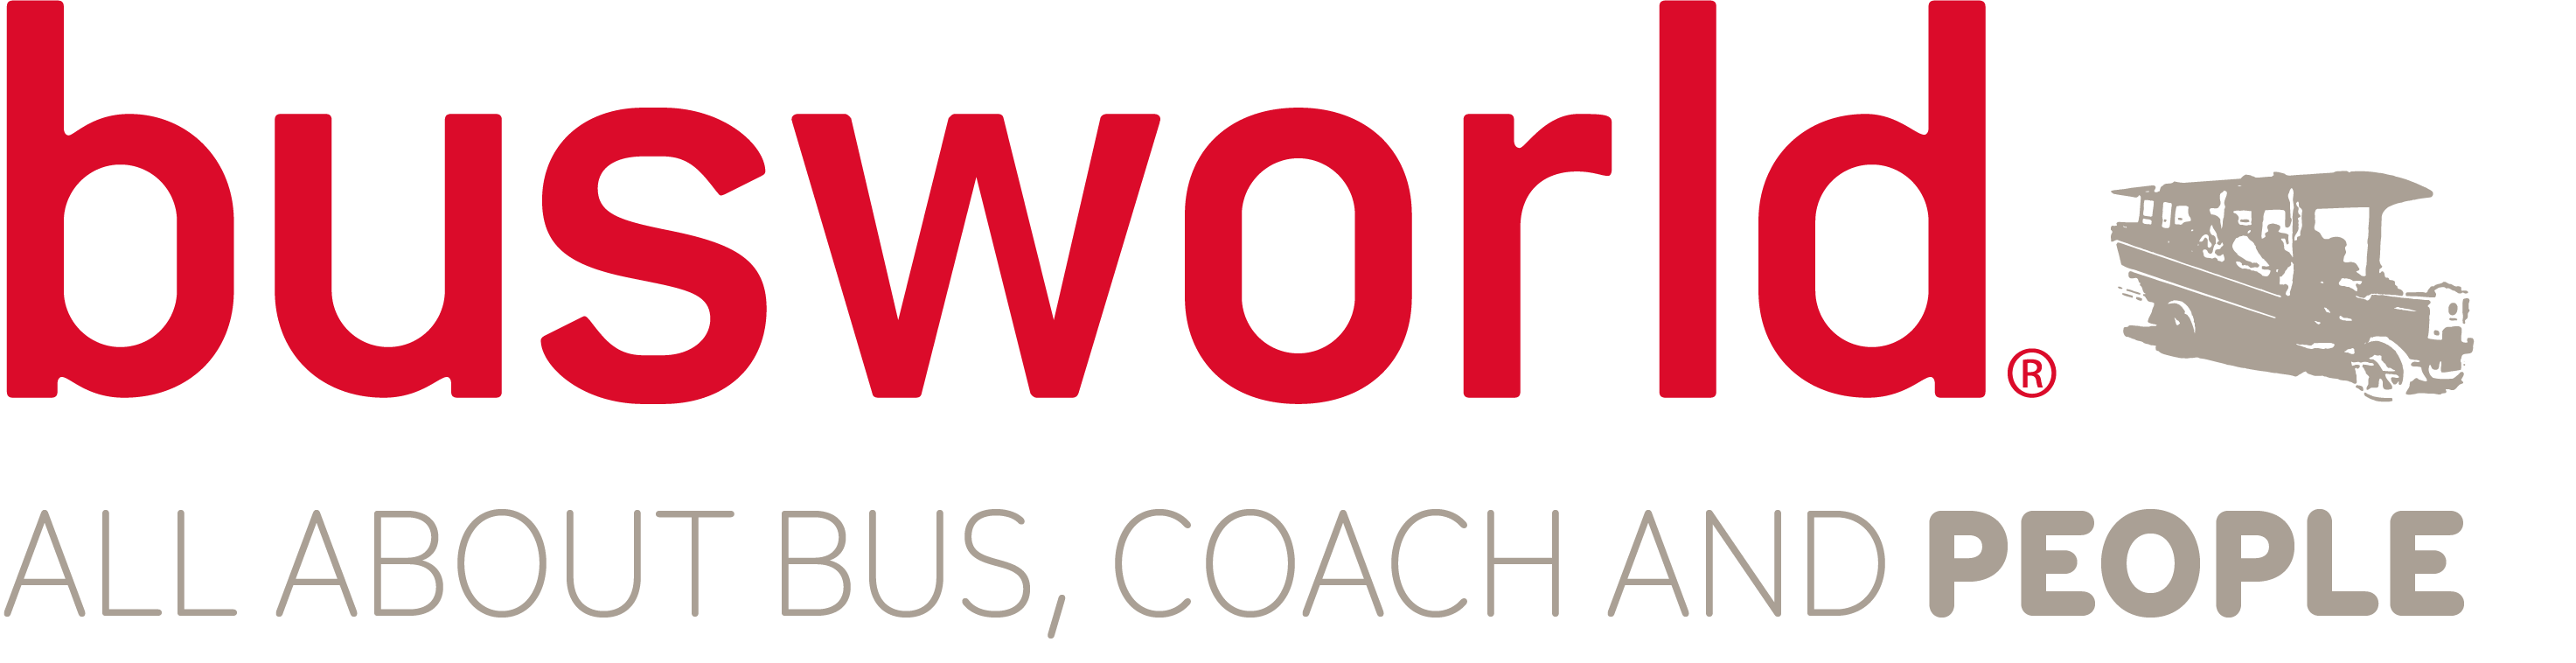 Busworld logo